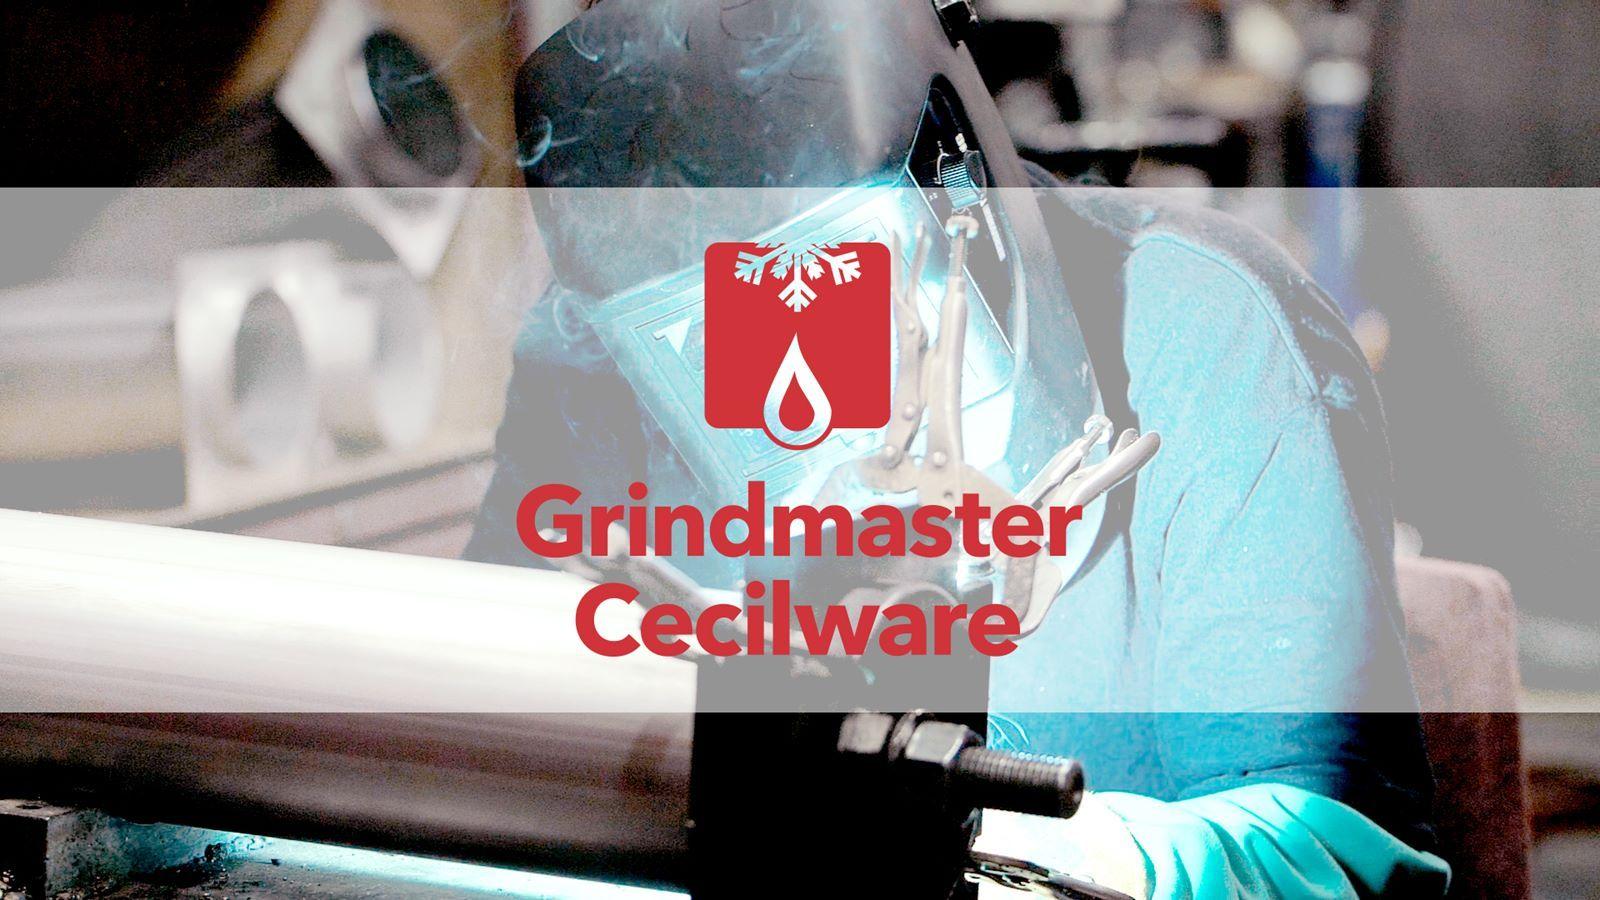 Grindmaster Logo - Grindmaster Cecilware - 4K Video Production by Hatfield Media